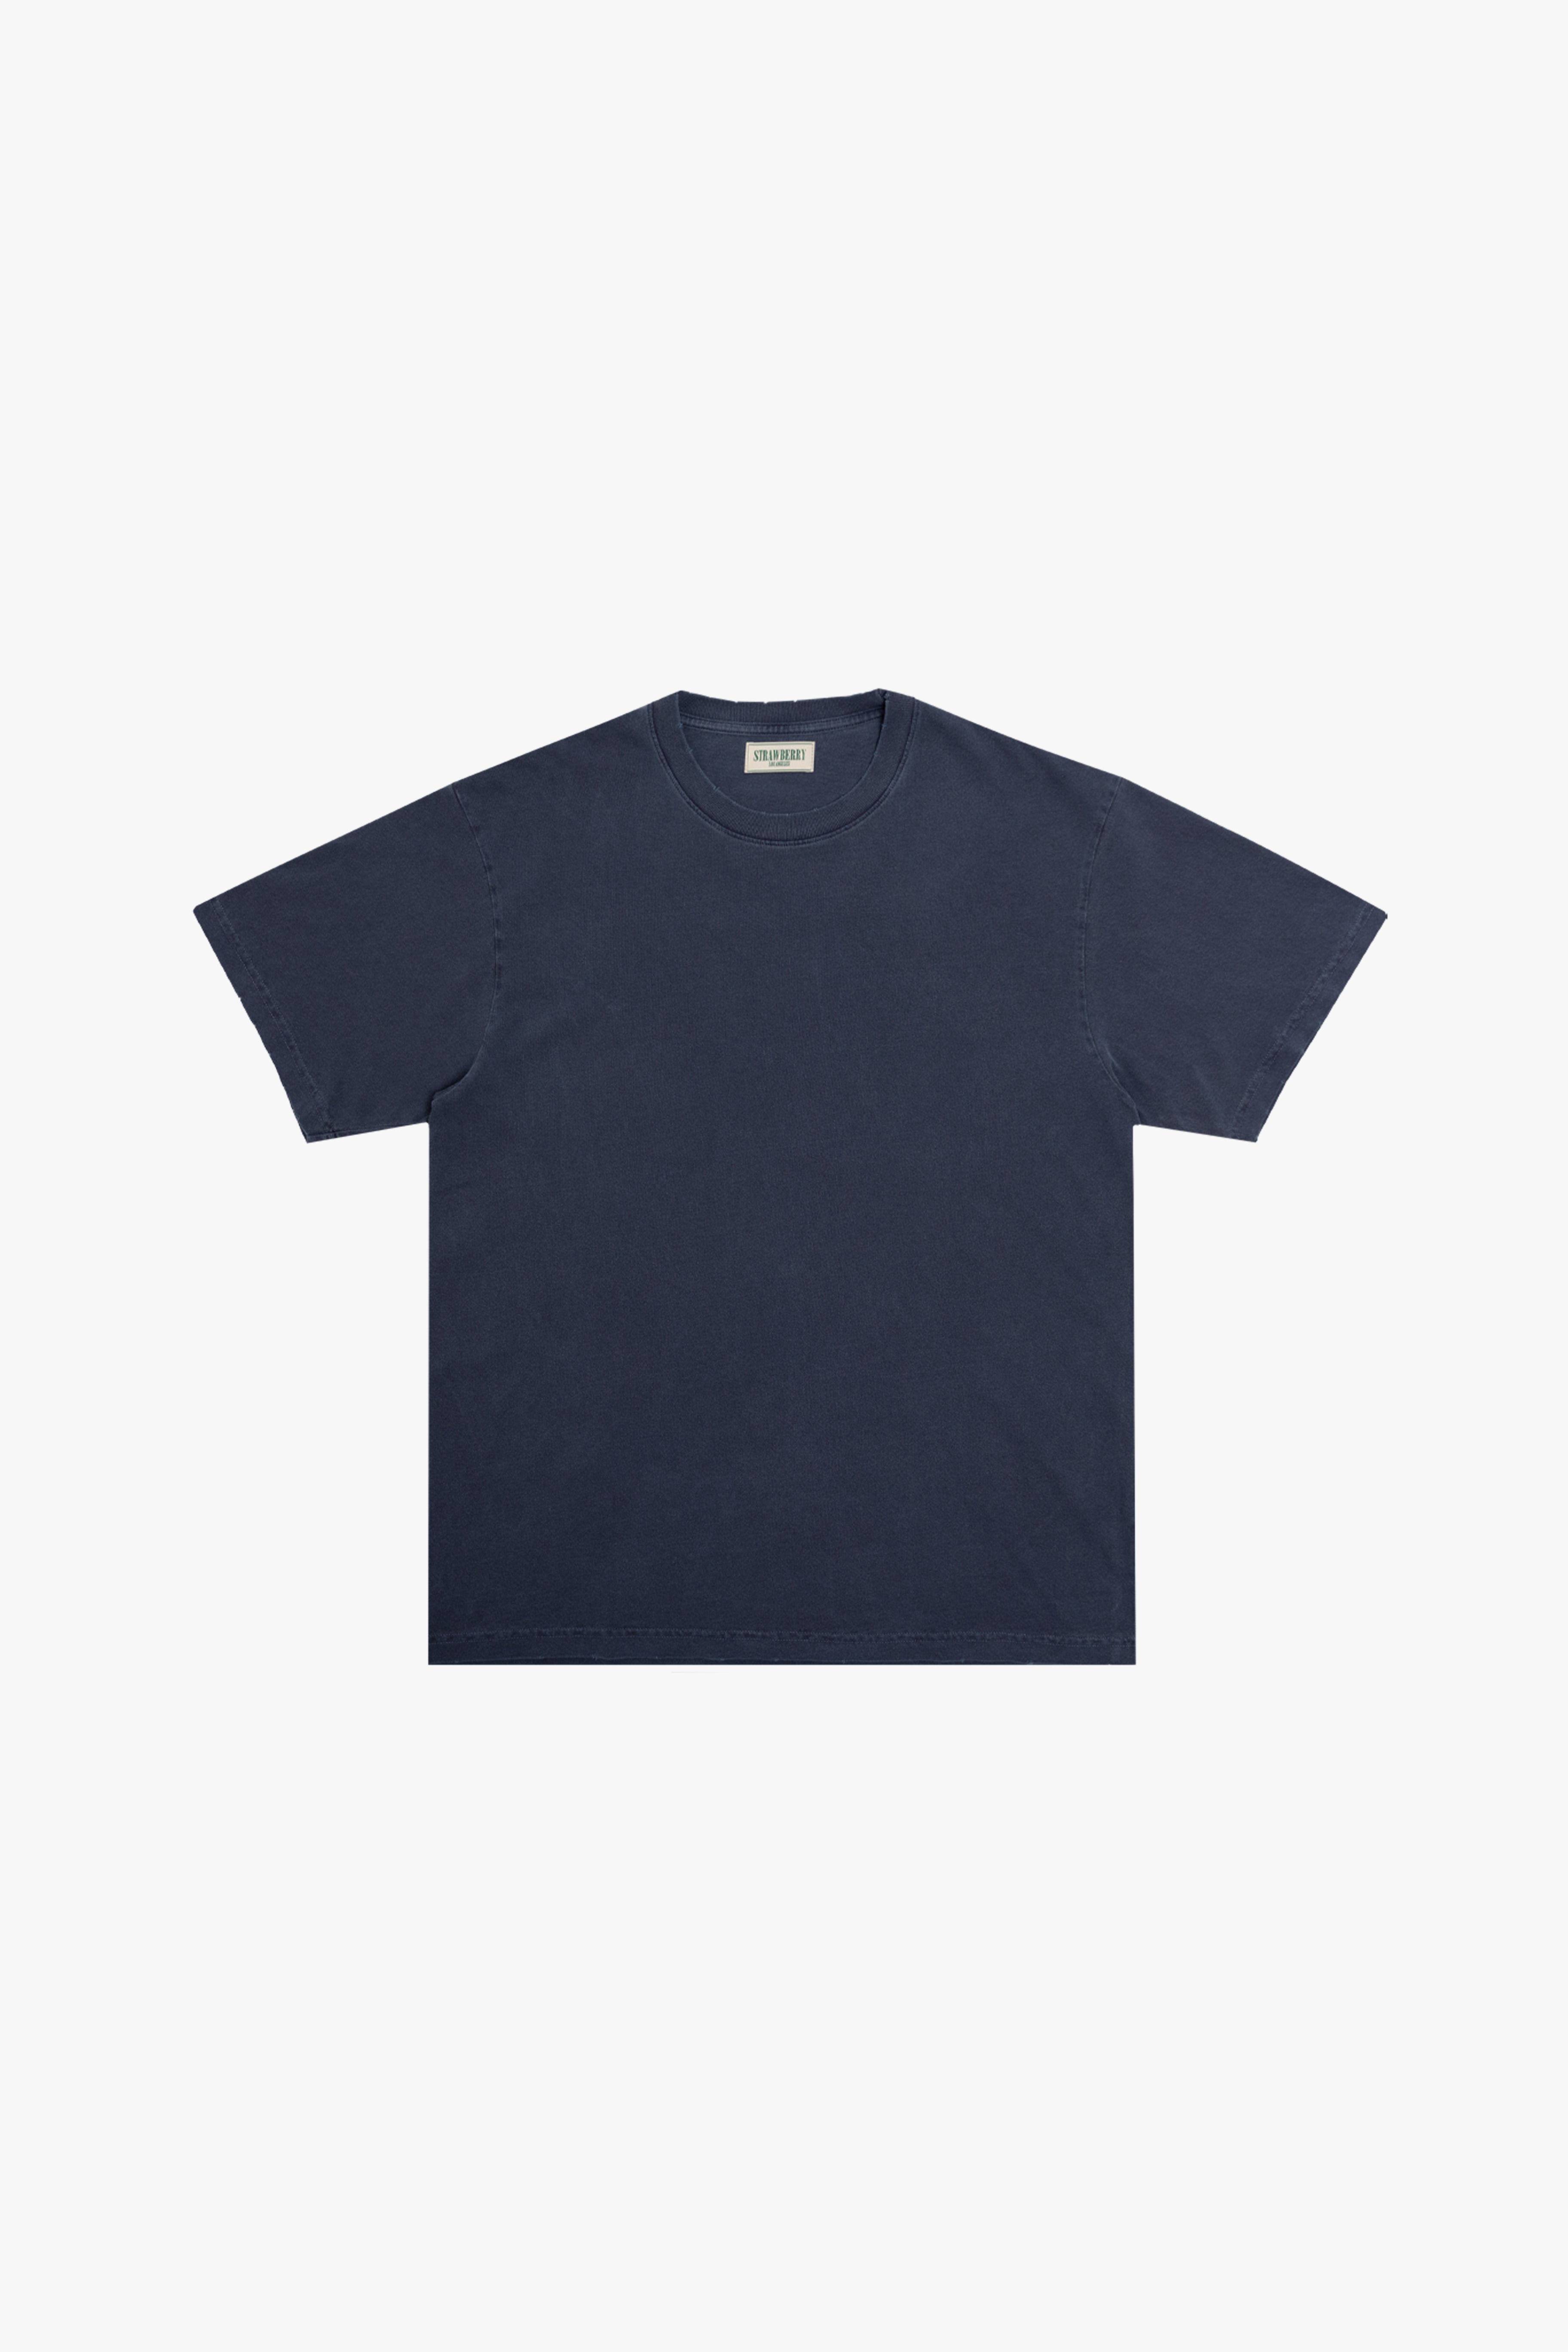 Camiseta azul marino vintage